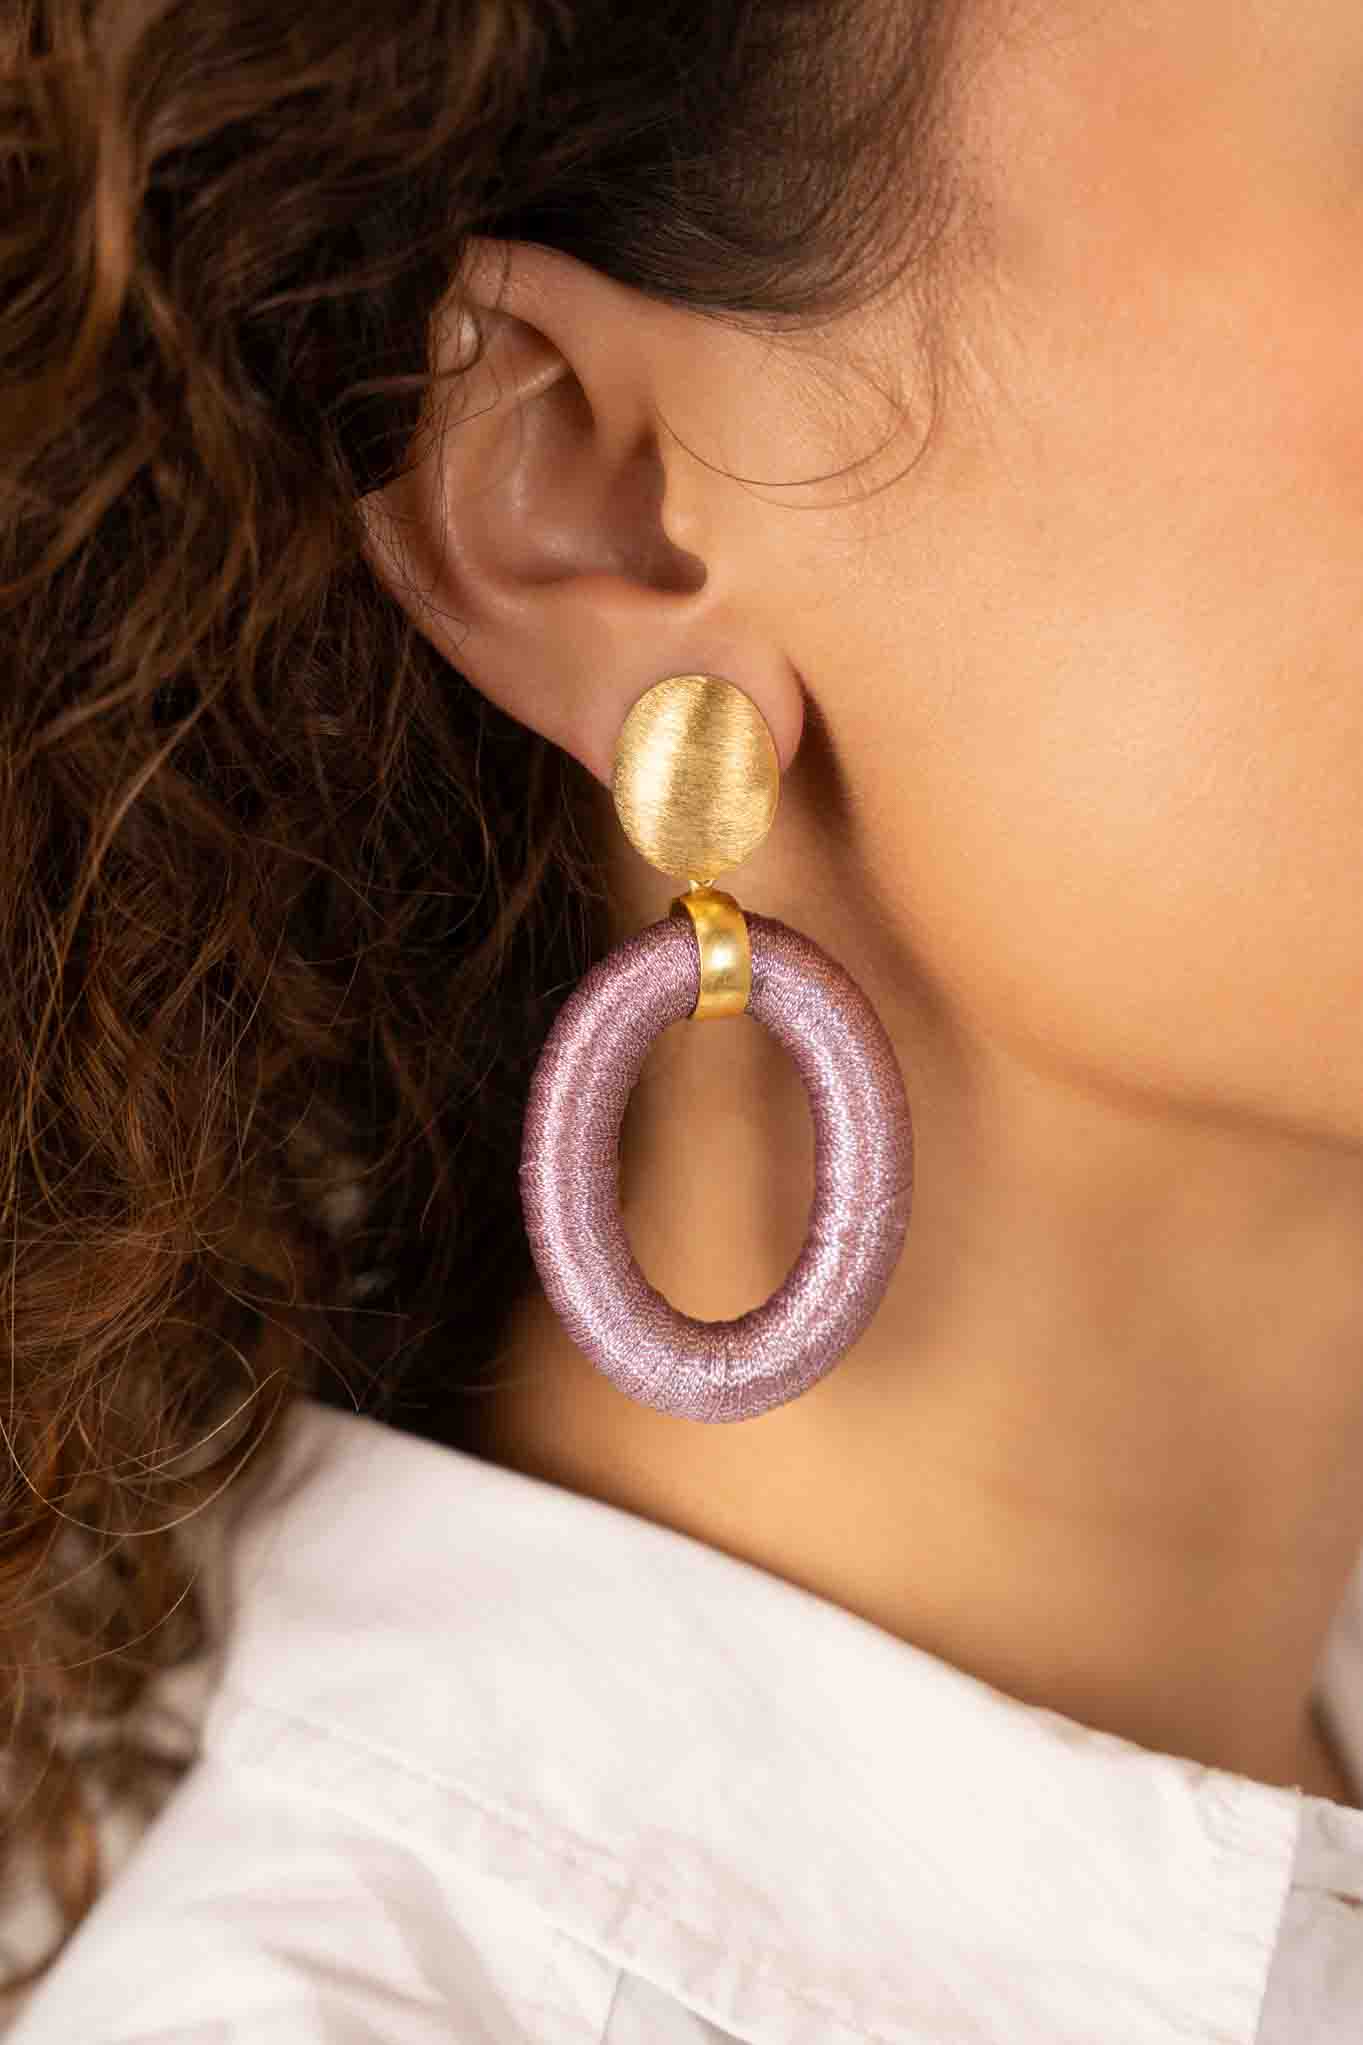 Lilac Earrings Faye Oval Llott-theme.productDescriptionPage.SEO.byTheBrand